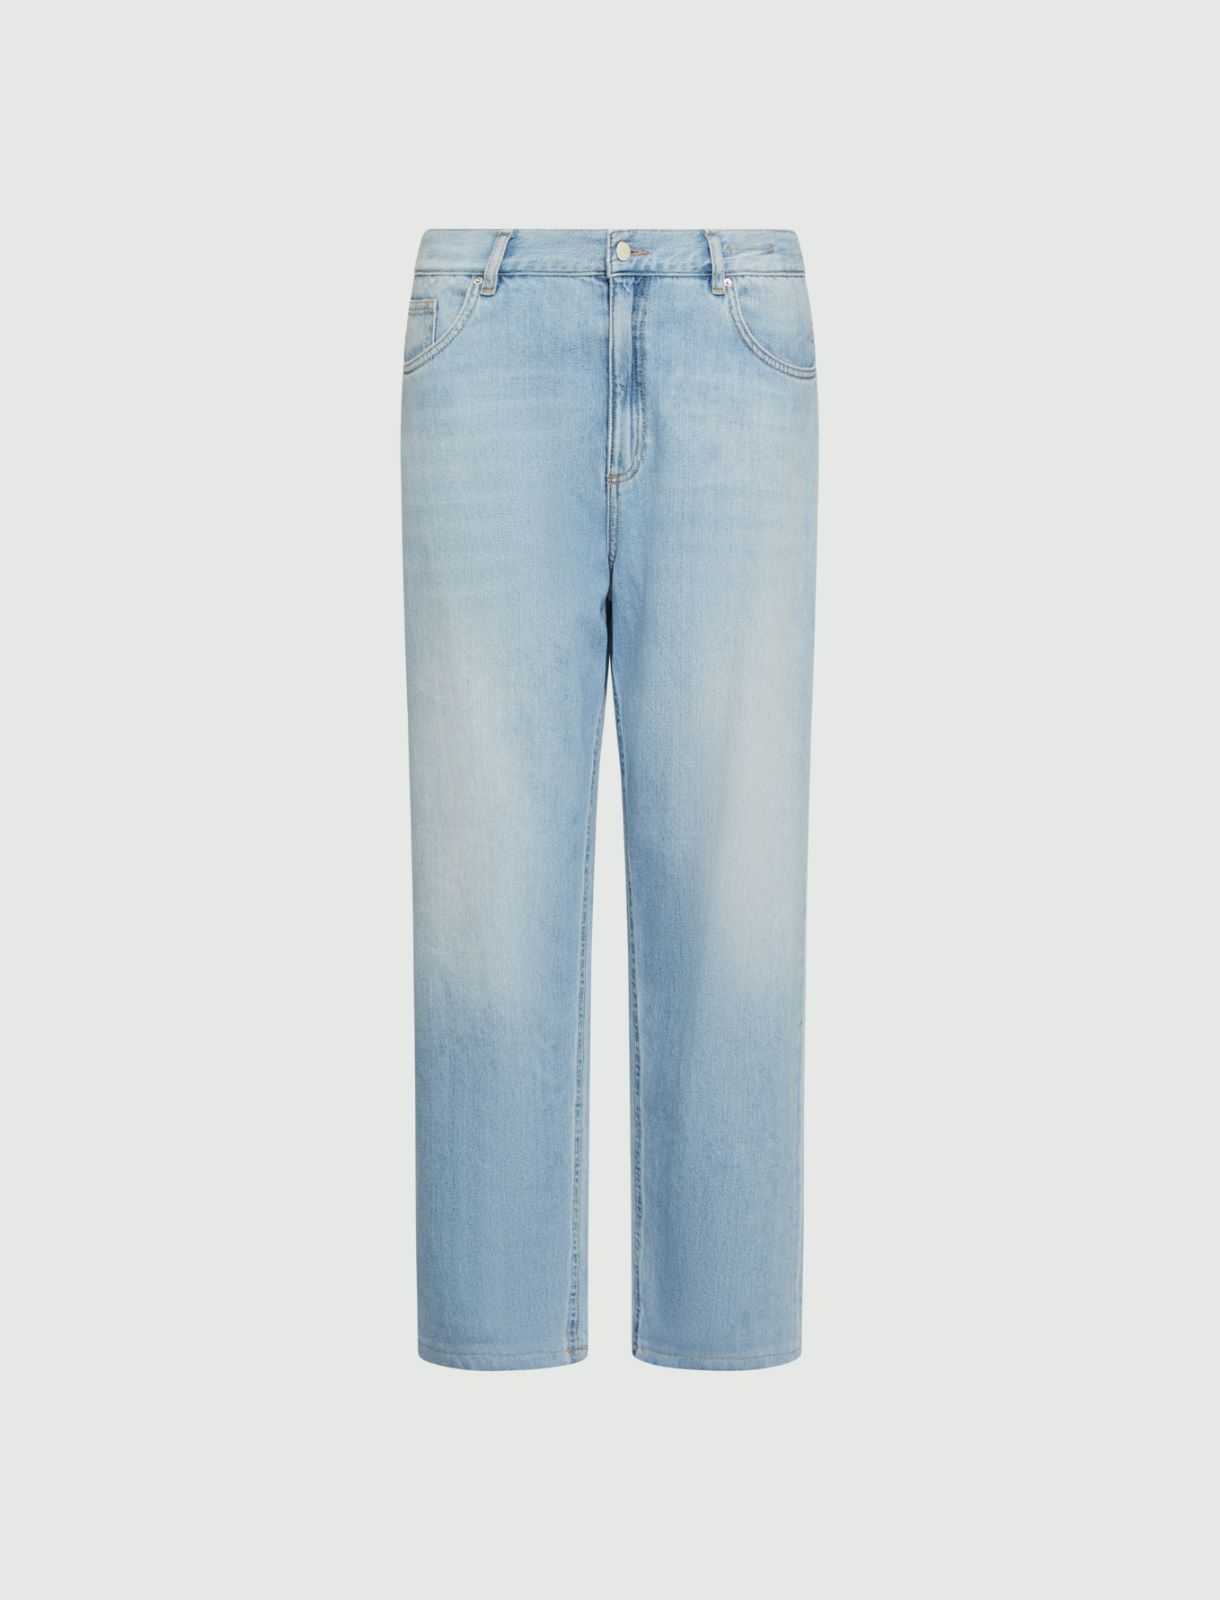 Jeans tom boy - Blue jeans - Marella - 6